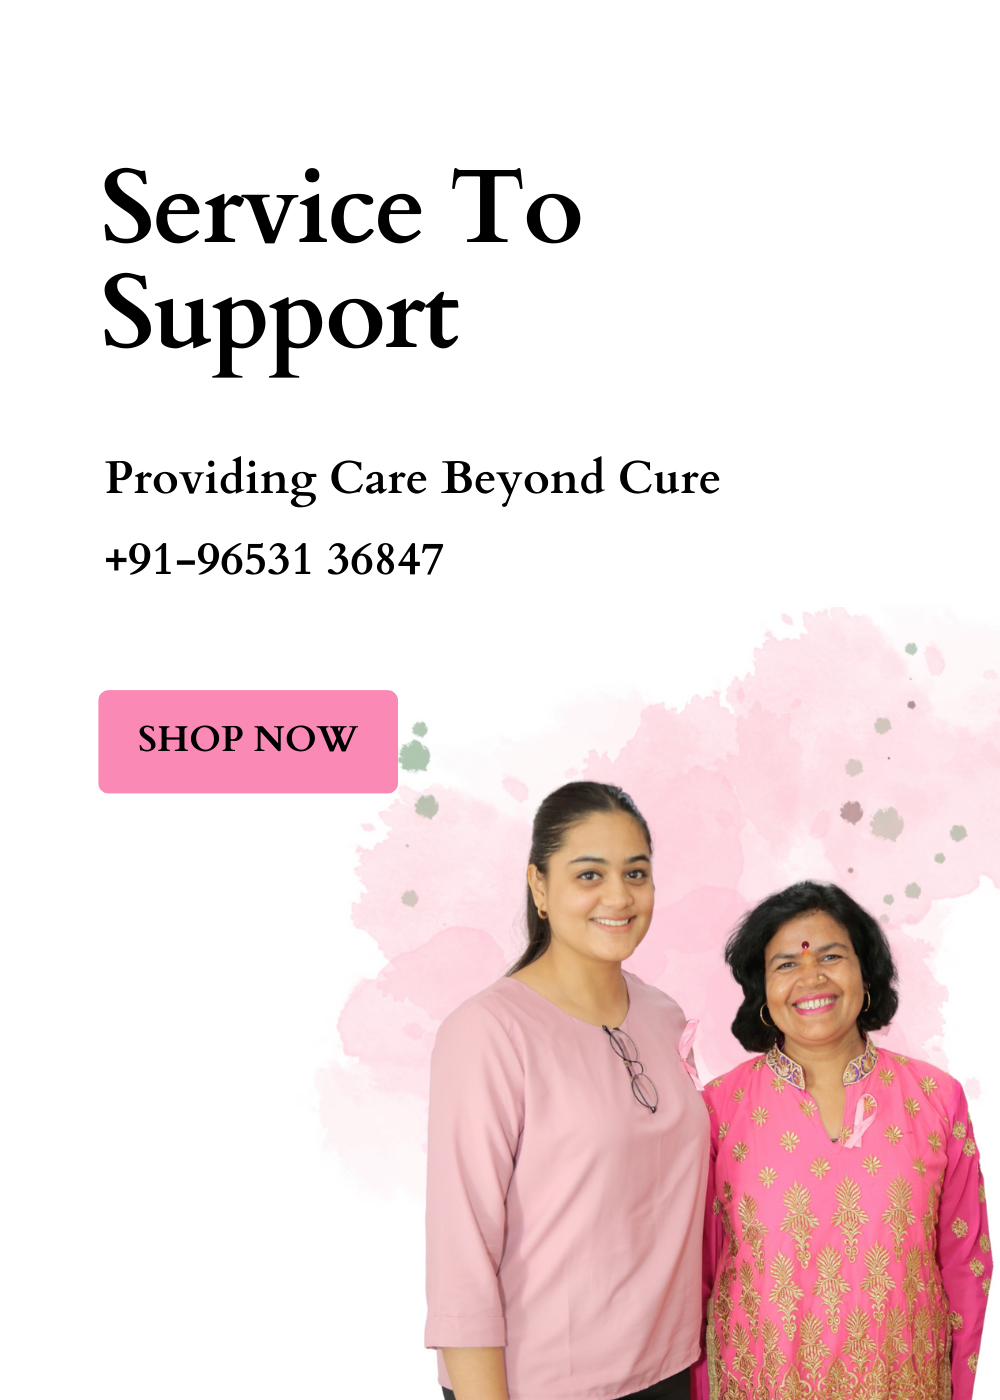 Buy Cotton Triangular Shaped Handcrafted Breast Prosthesis Medium Weight -  CLOVIA X CANFEM Online India, Best Prices, COD - Clovia - AC0068P99